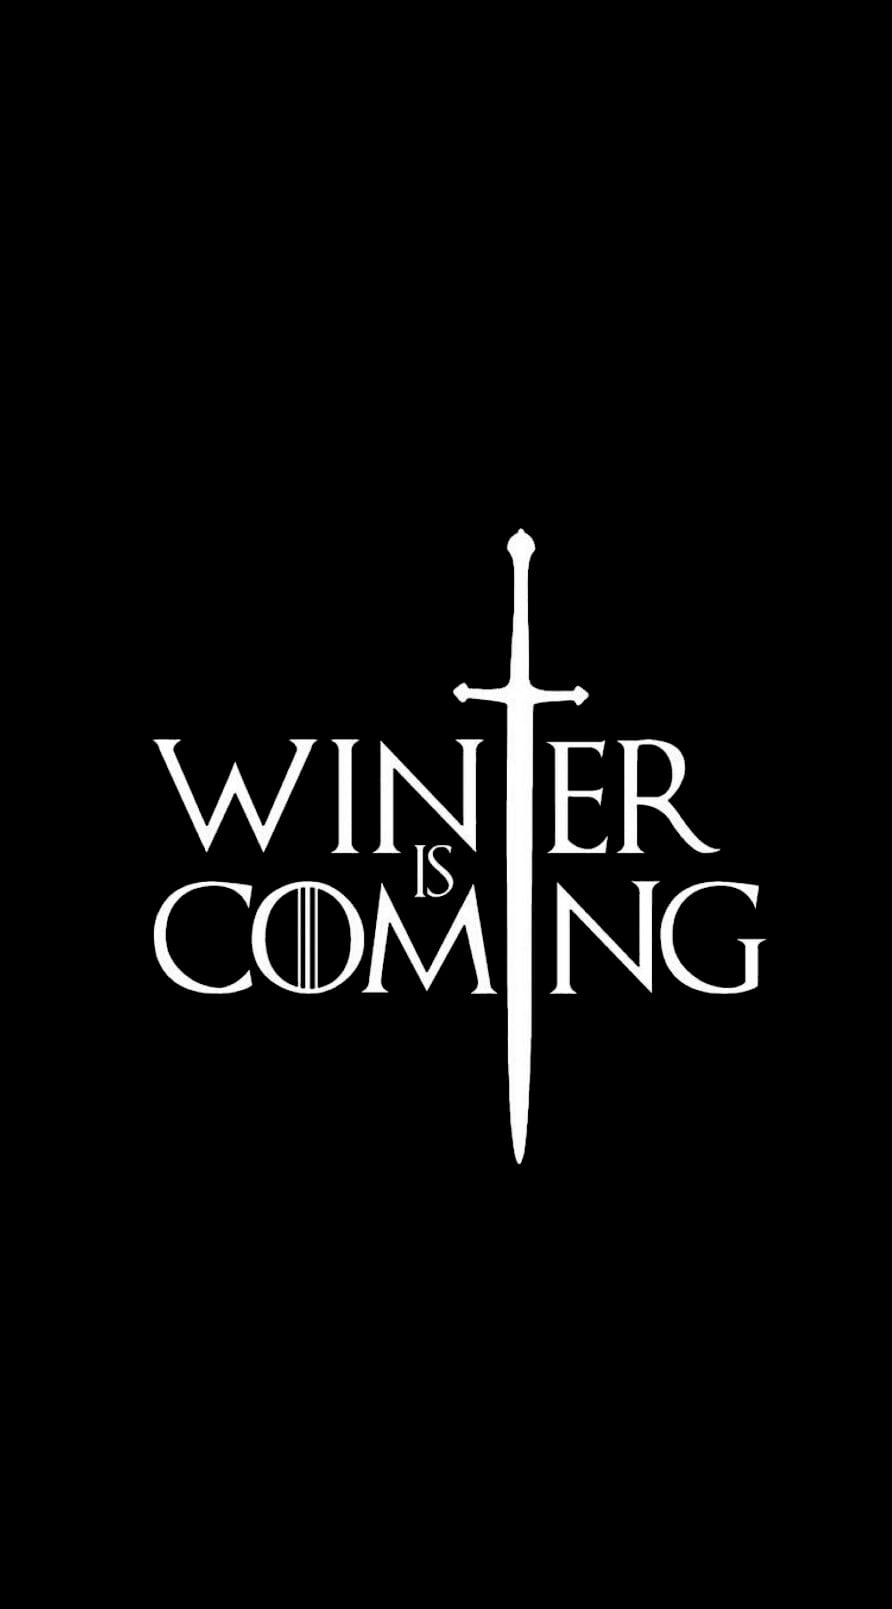 General 892x1609 Winter Is Coming Game of Thrones sword portrait display black background simple background minimalism TV series